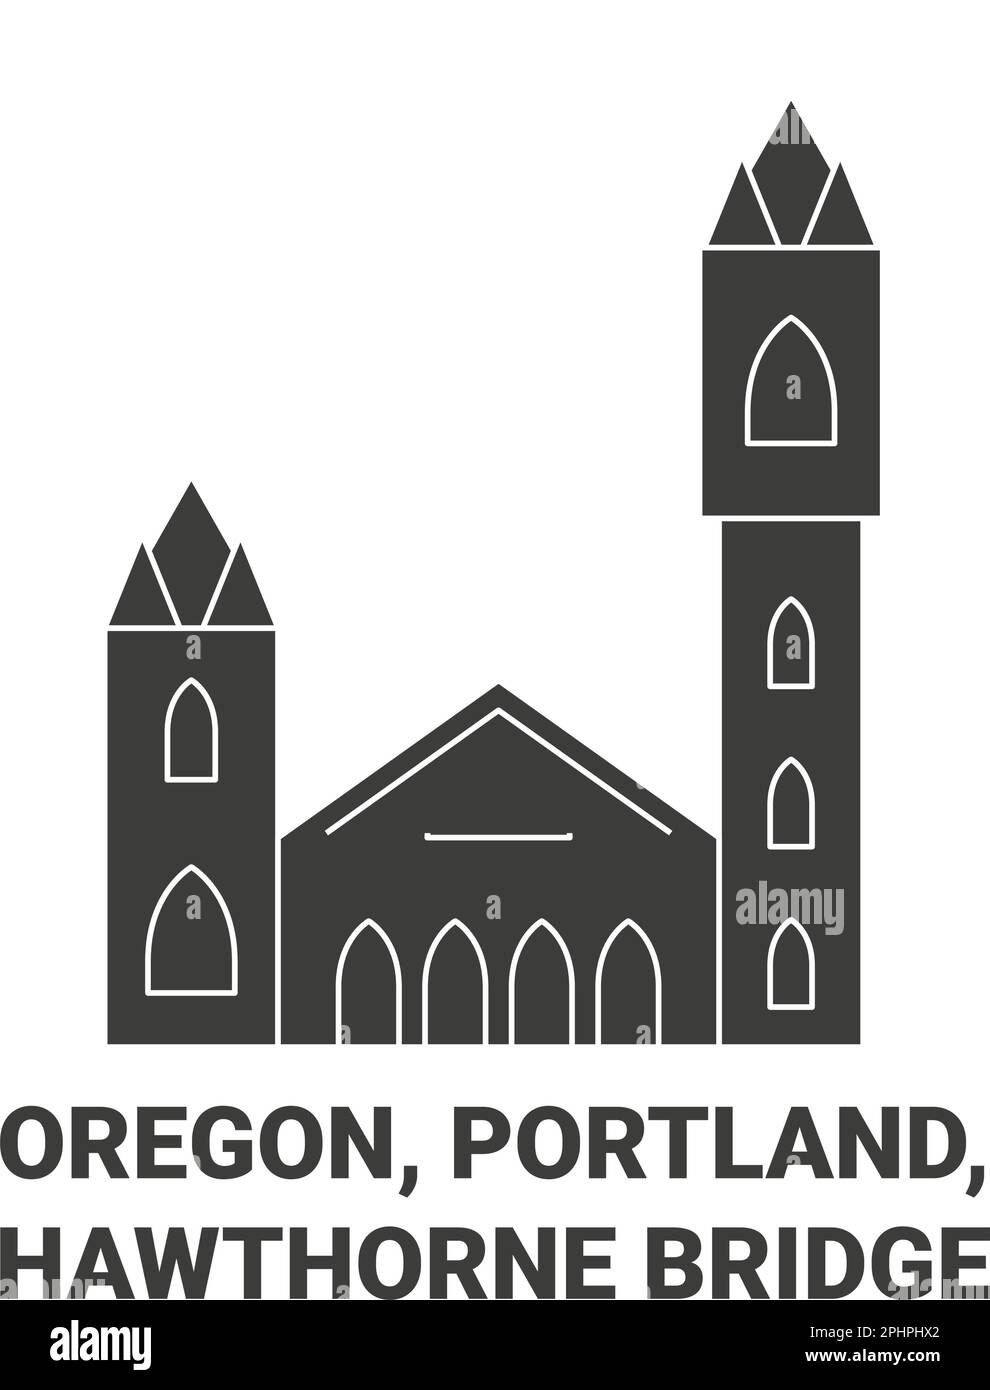 United States, Oregon, Portland, Hawthorne Bridge travel landmark vector illustration Stock Vector